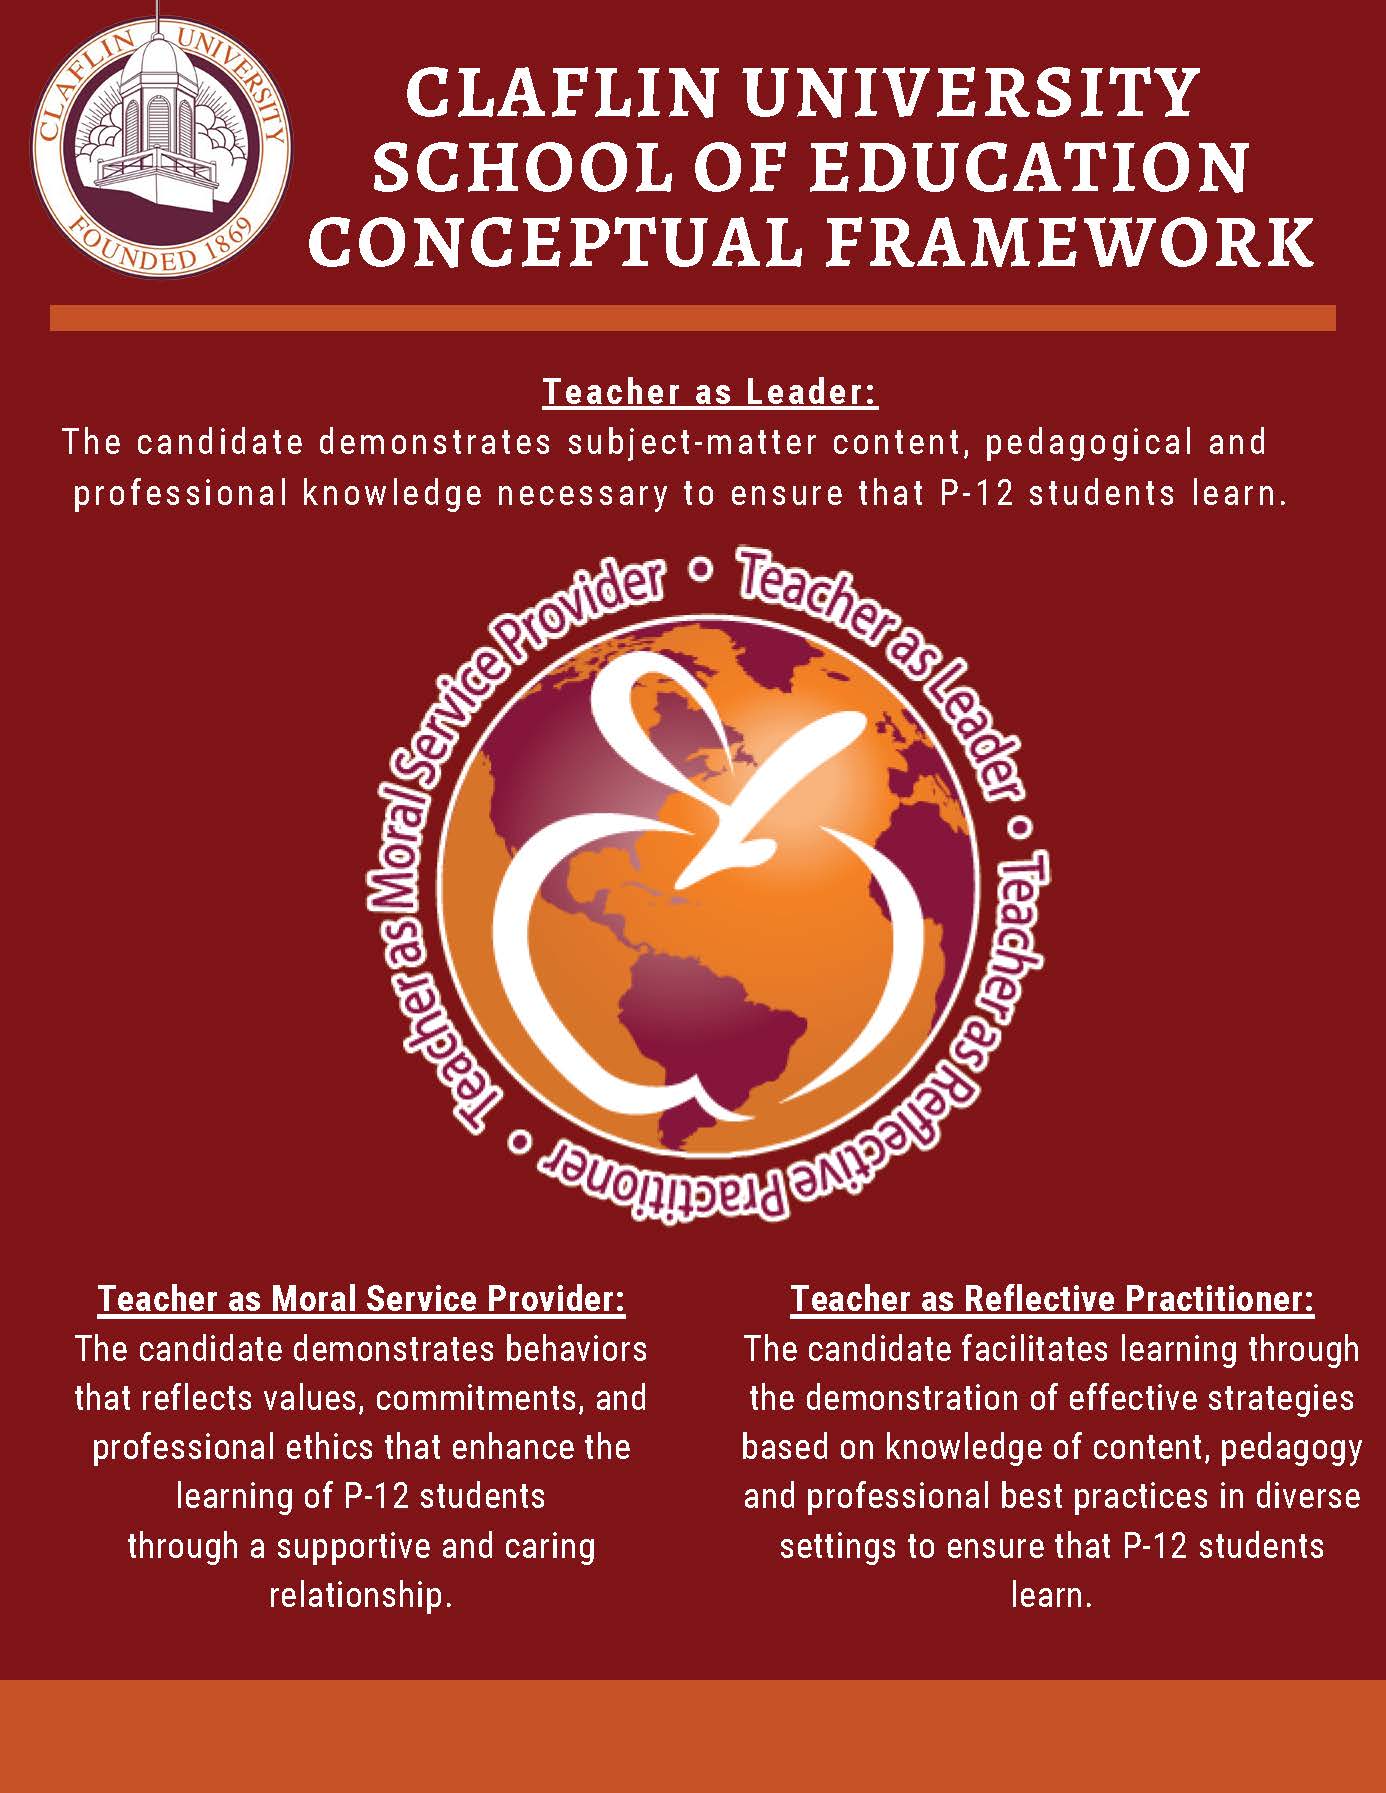 Claflin University School of Education Conceptual Framework